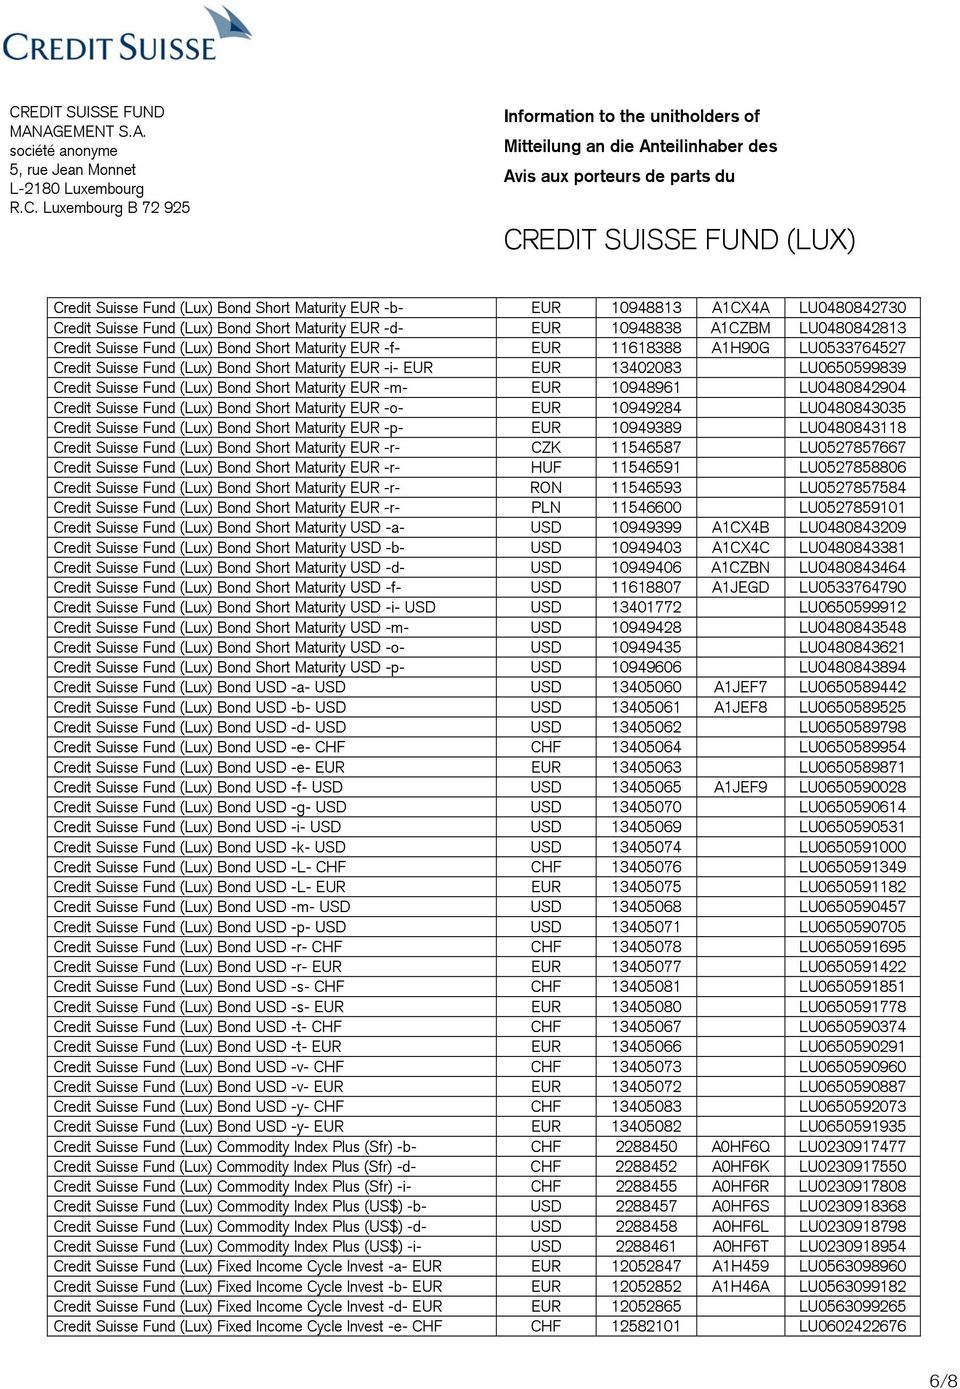 EUR 10948961 LU0480842904 Credit Suisse Fund (Lux) Bond Short Maturity EUR -o- EUR 10949284 LU0480843035 Credit Suisse Fund (Lux) Bond Short Maturity EUR -p- EUR 10949389 LU0480843118 Credit Suisse